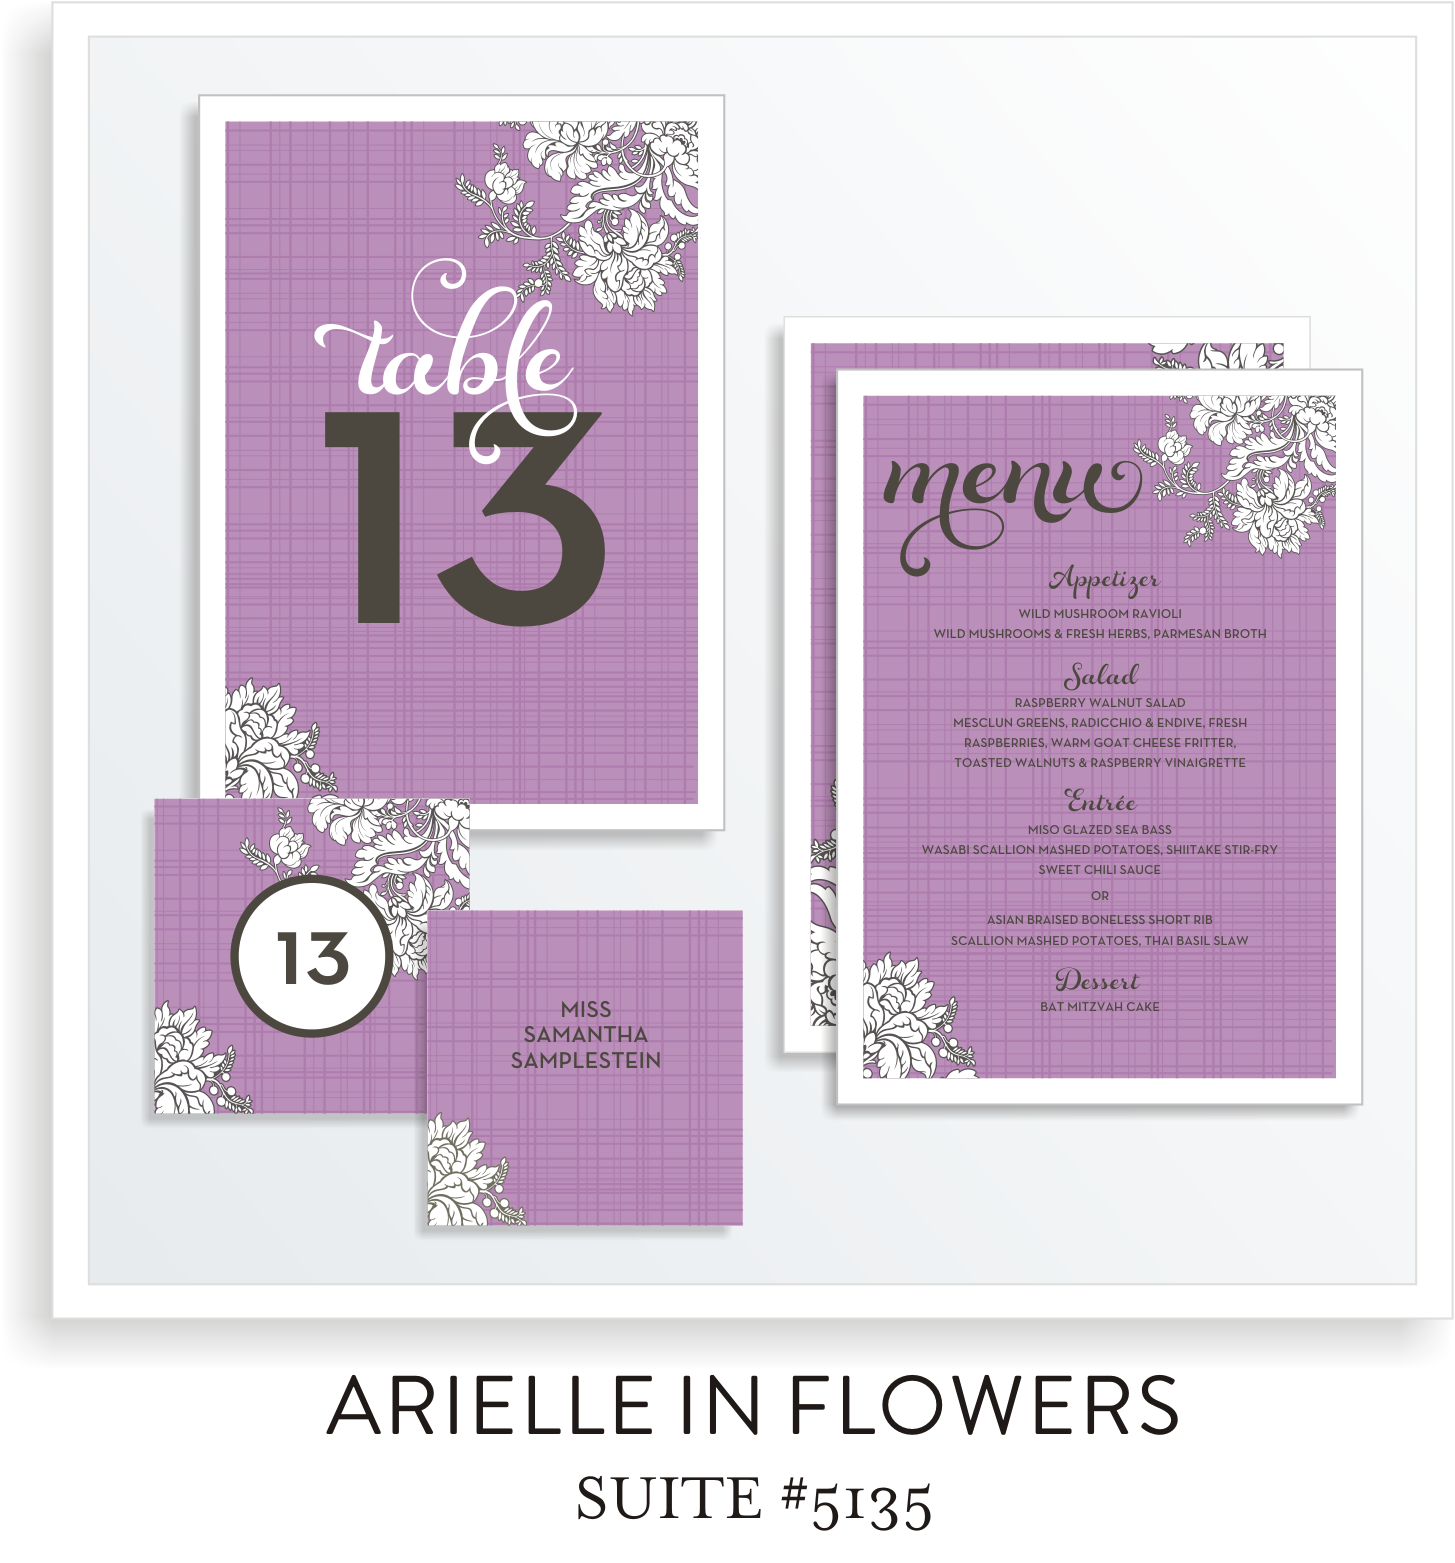 Table Top Decor Bat Mitzvah Suite 5135 - Arielle in Flowers